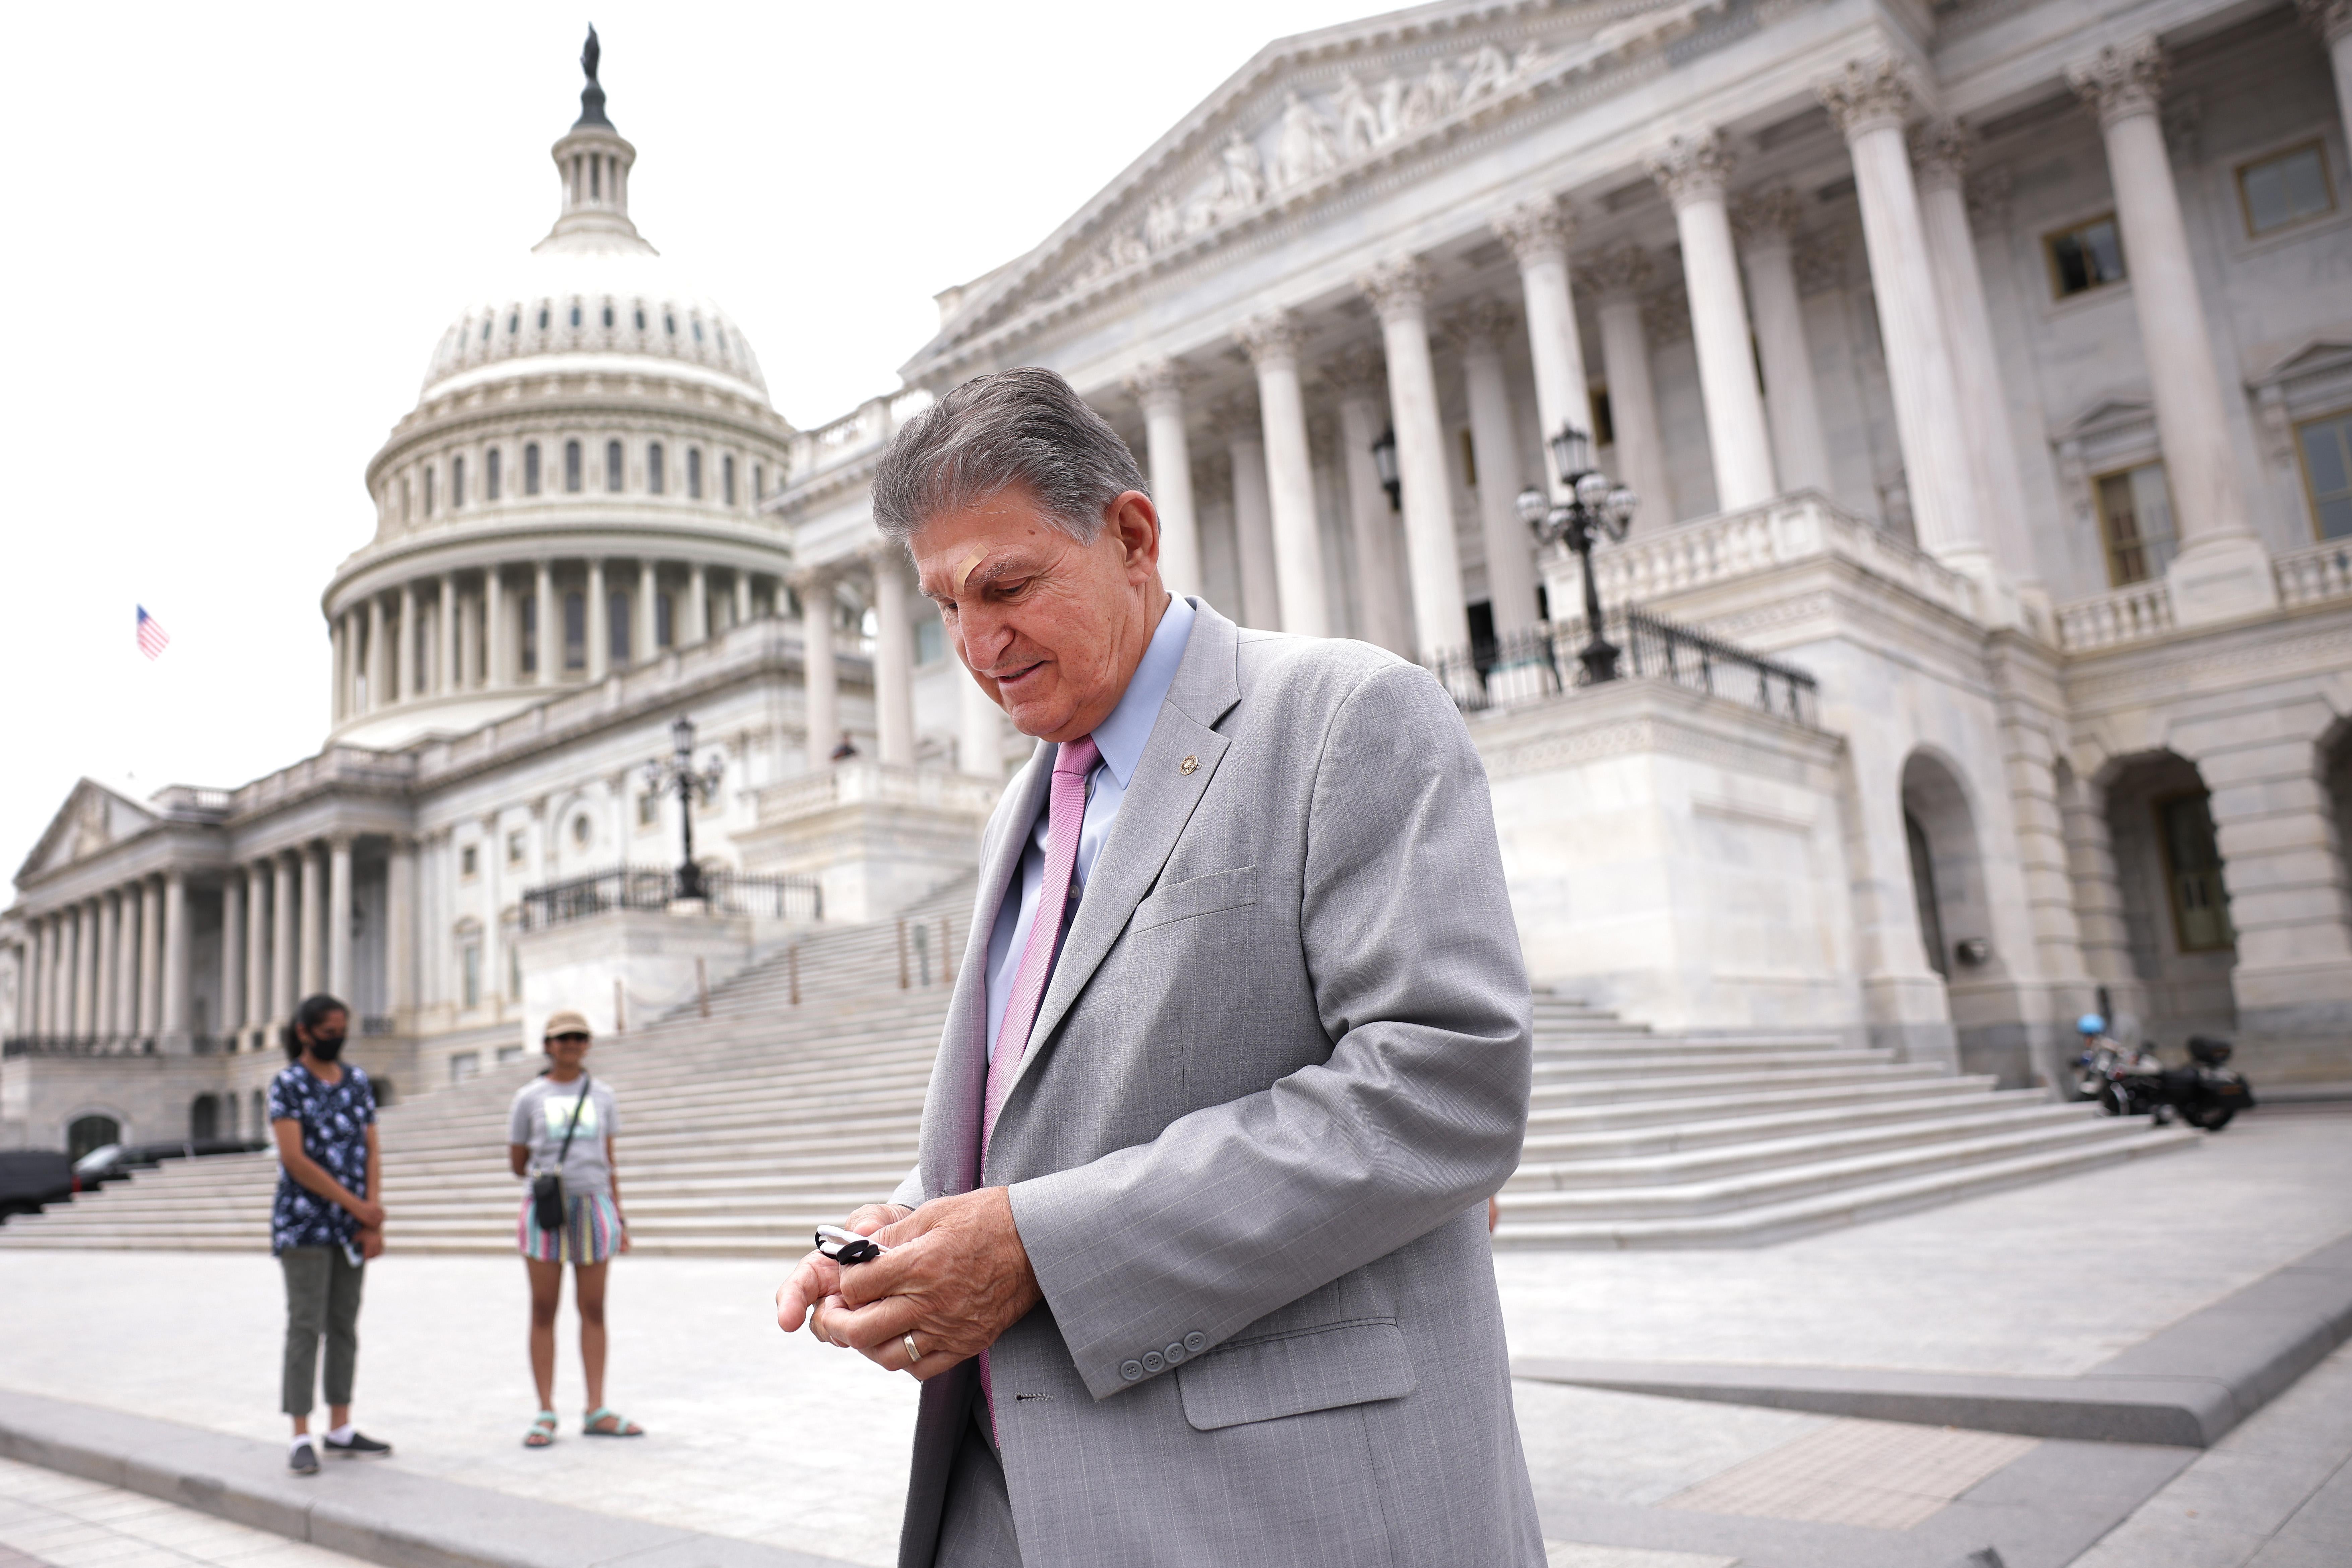 Sen. Joe Manchin leaves the U.S. Capitol following a vote on August 3, 2021 in Washington, DC.